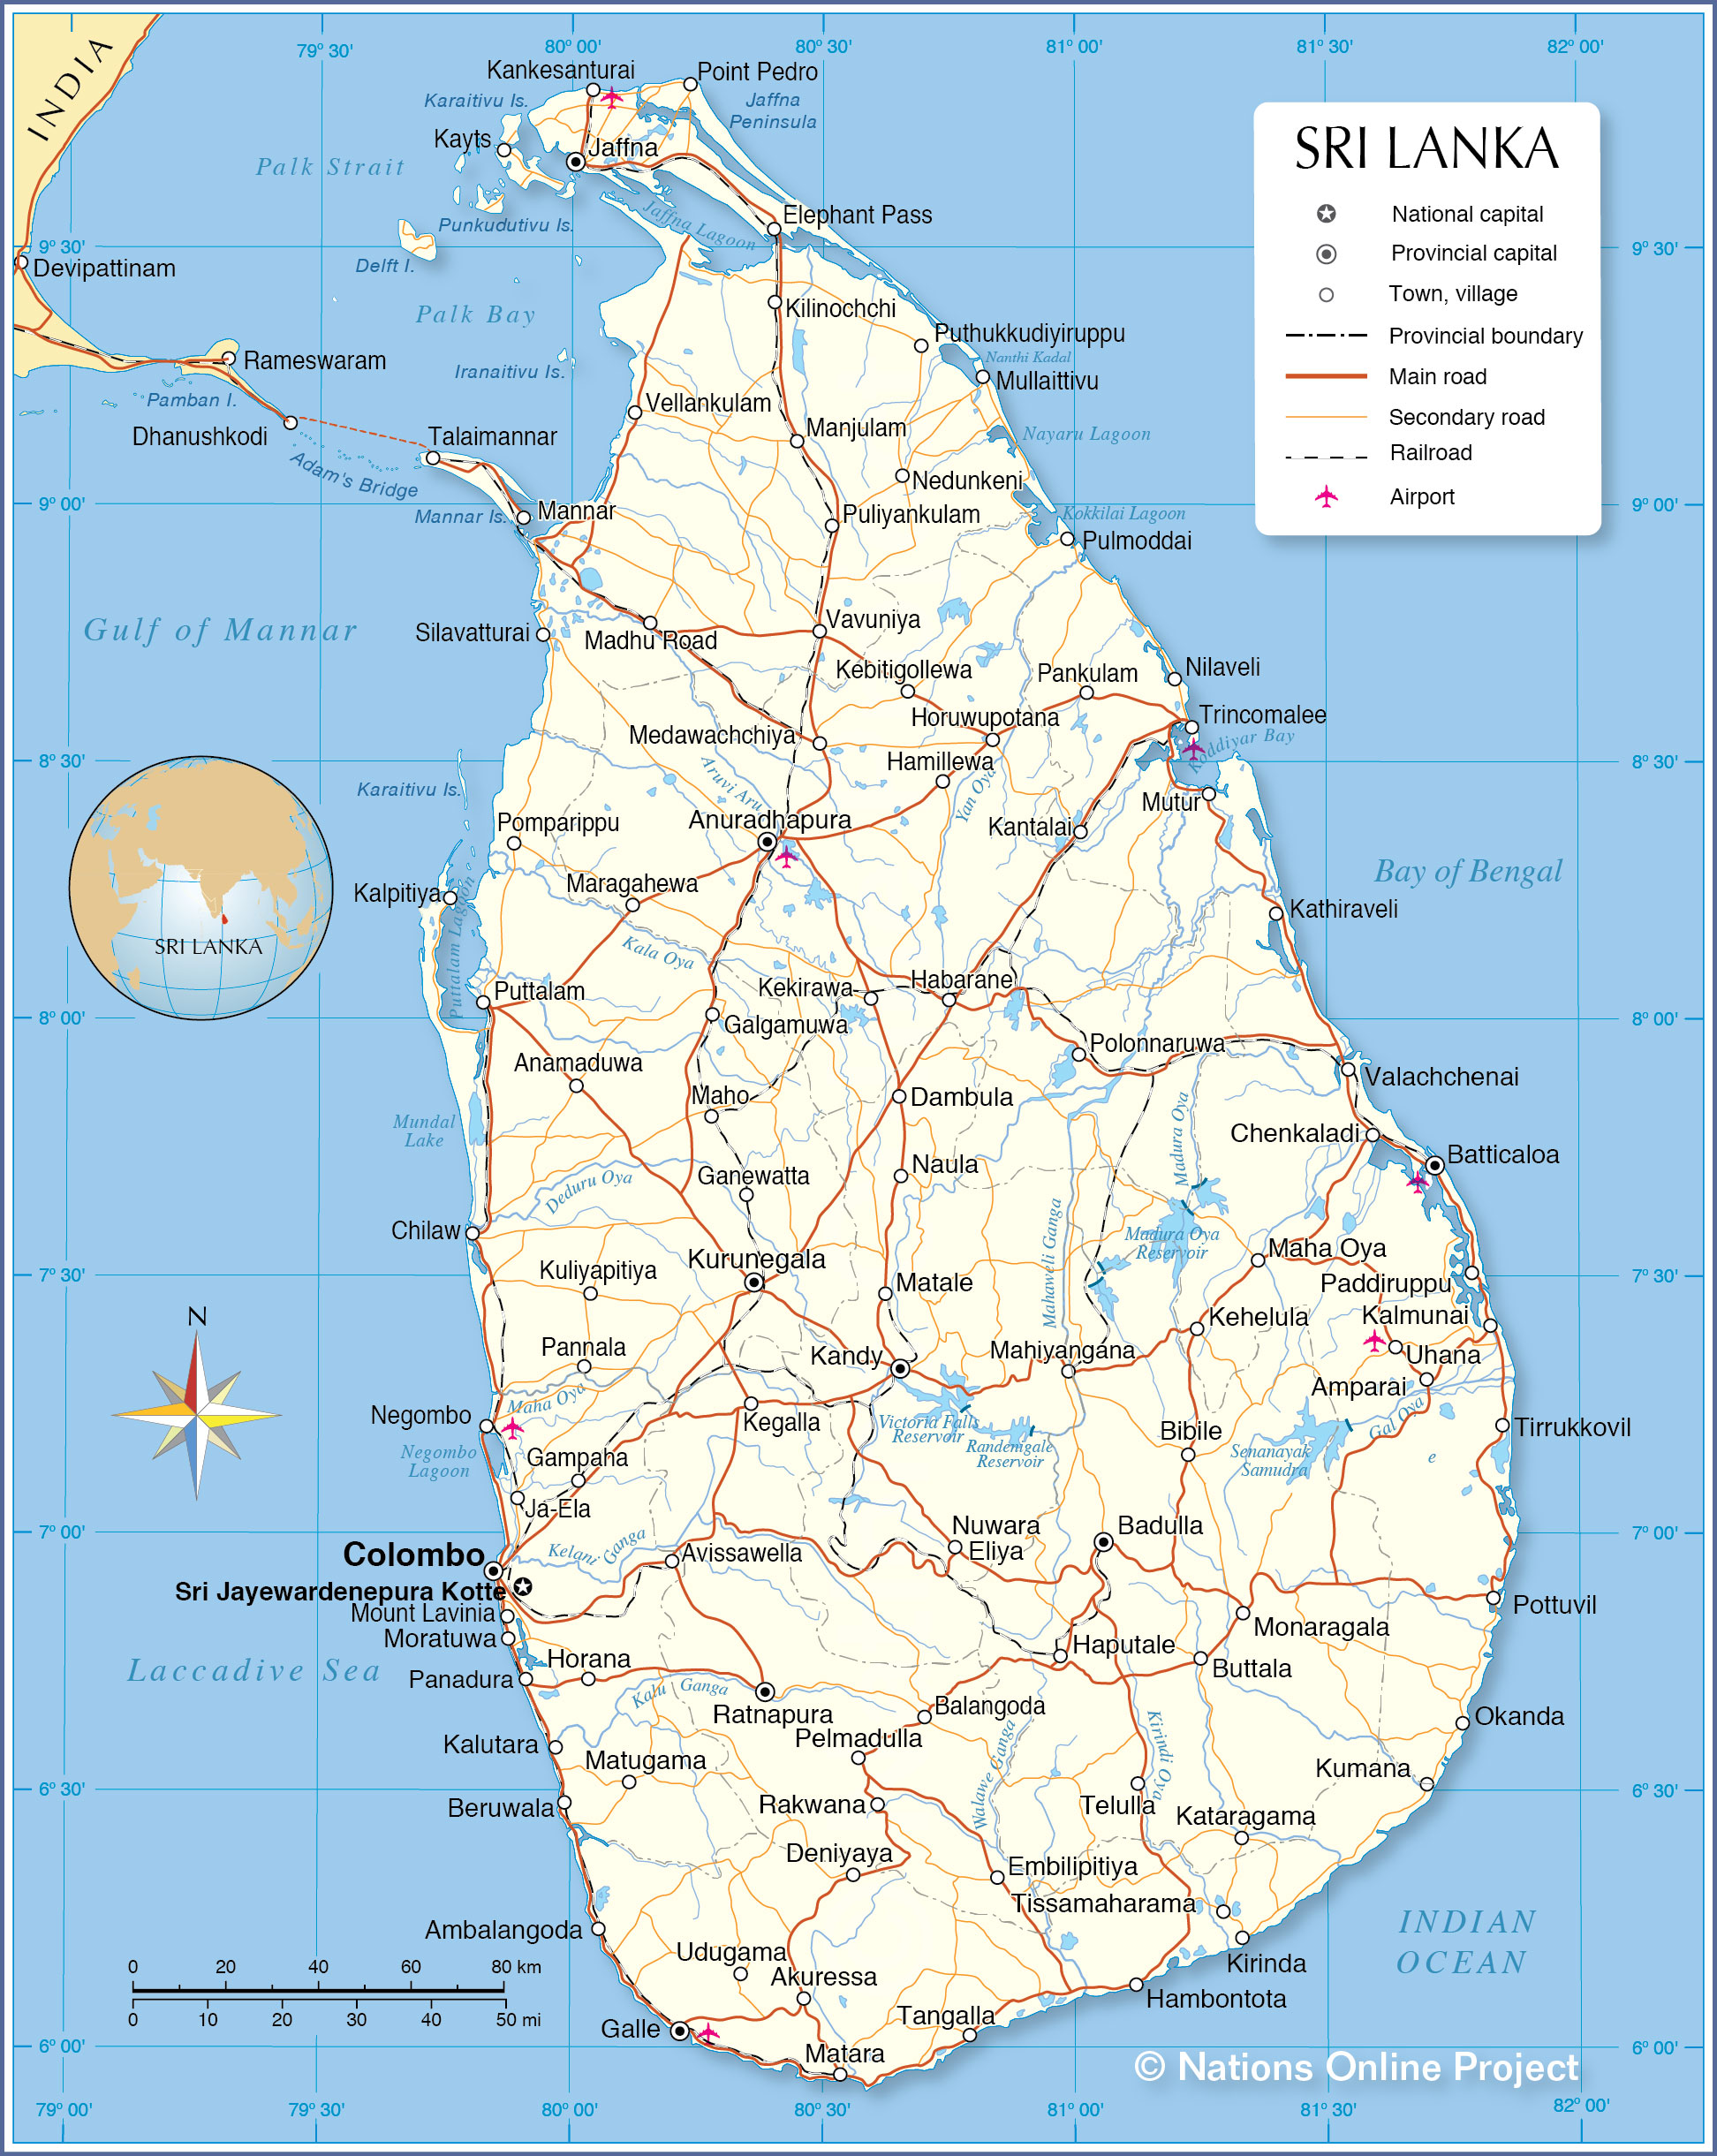 Sri Lanka Map 2020 Political Map Of Sri Lanka - Nations Online Project